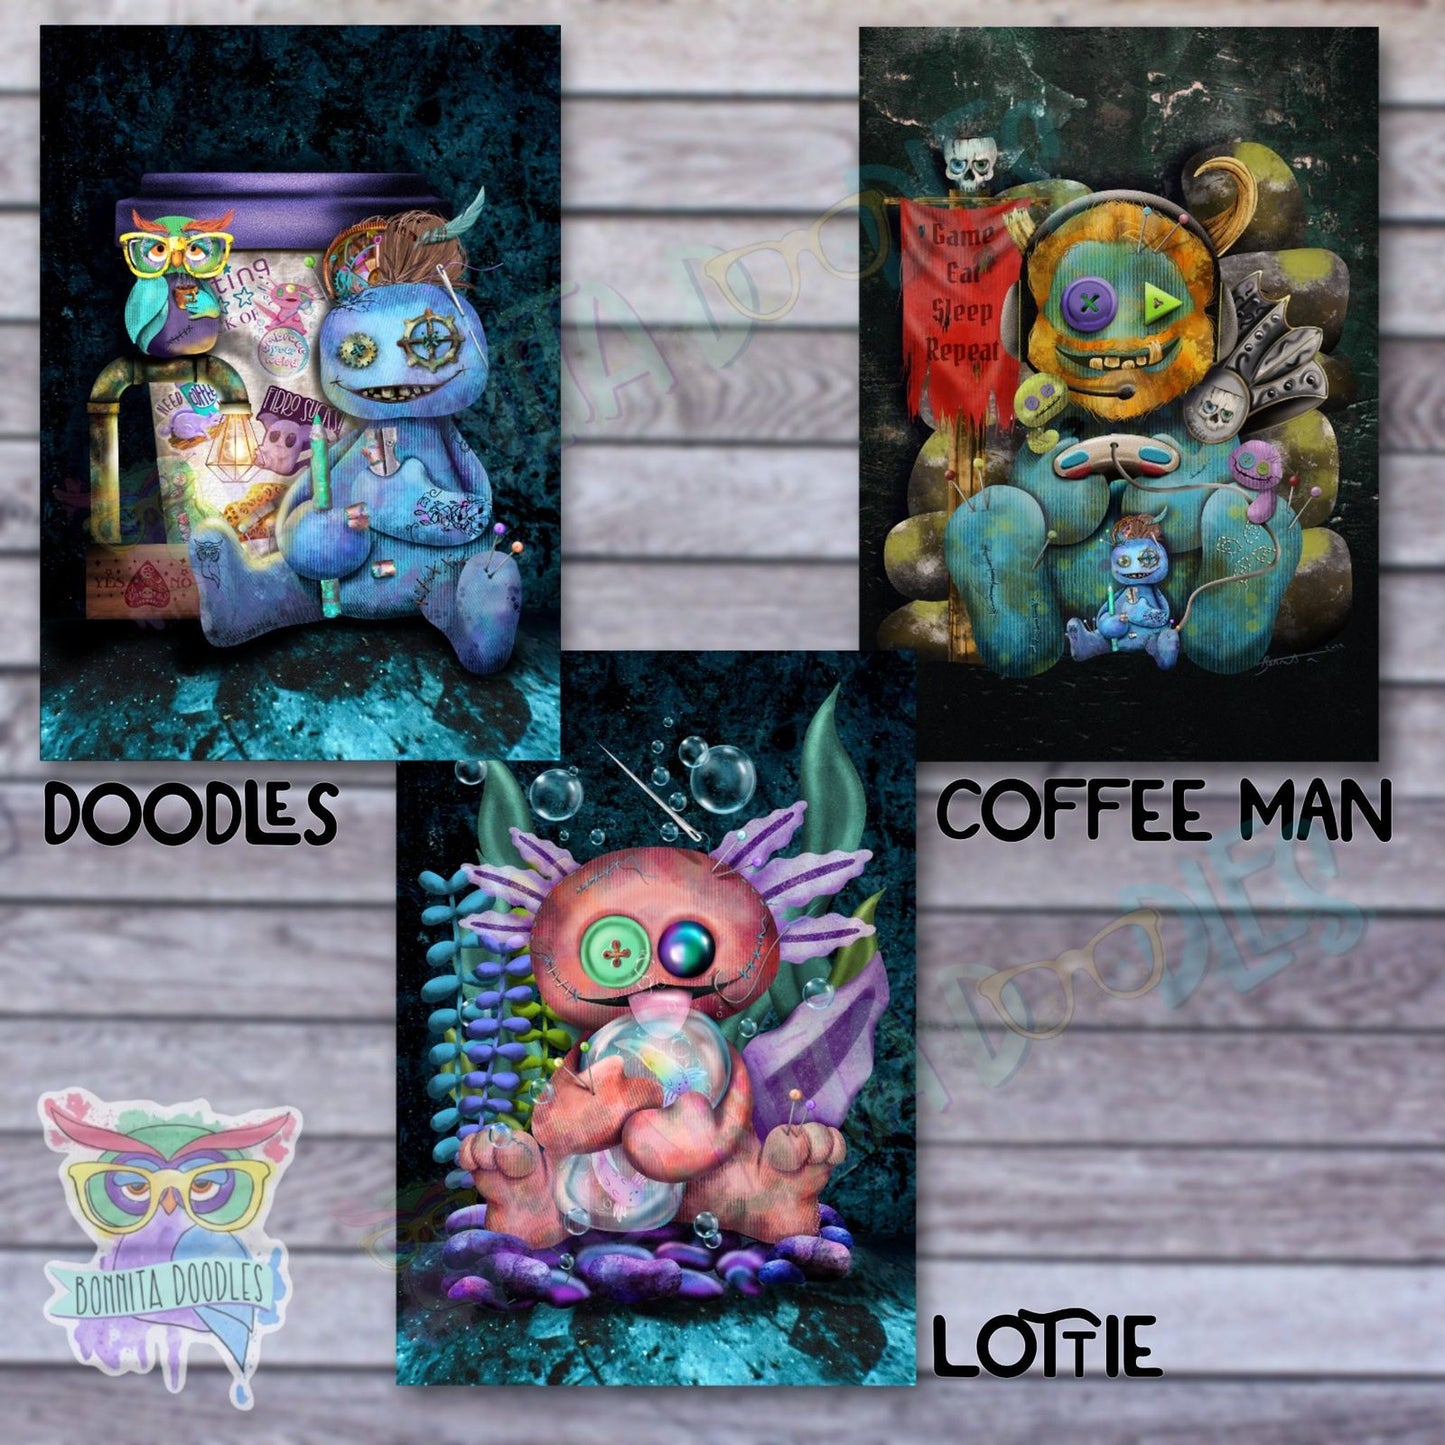 Voodoo dolls - a5 / a4 home decor art print - spooky, Halloween, magic - pin doll